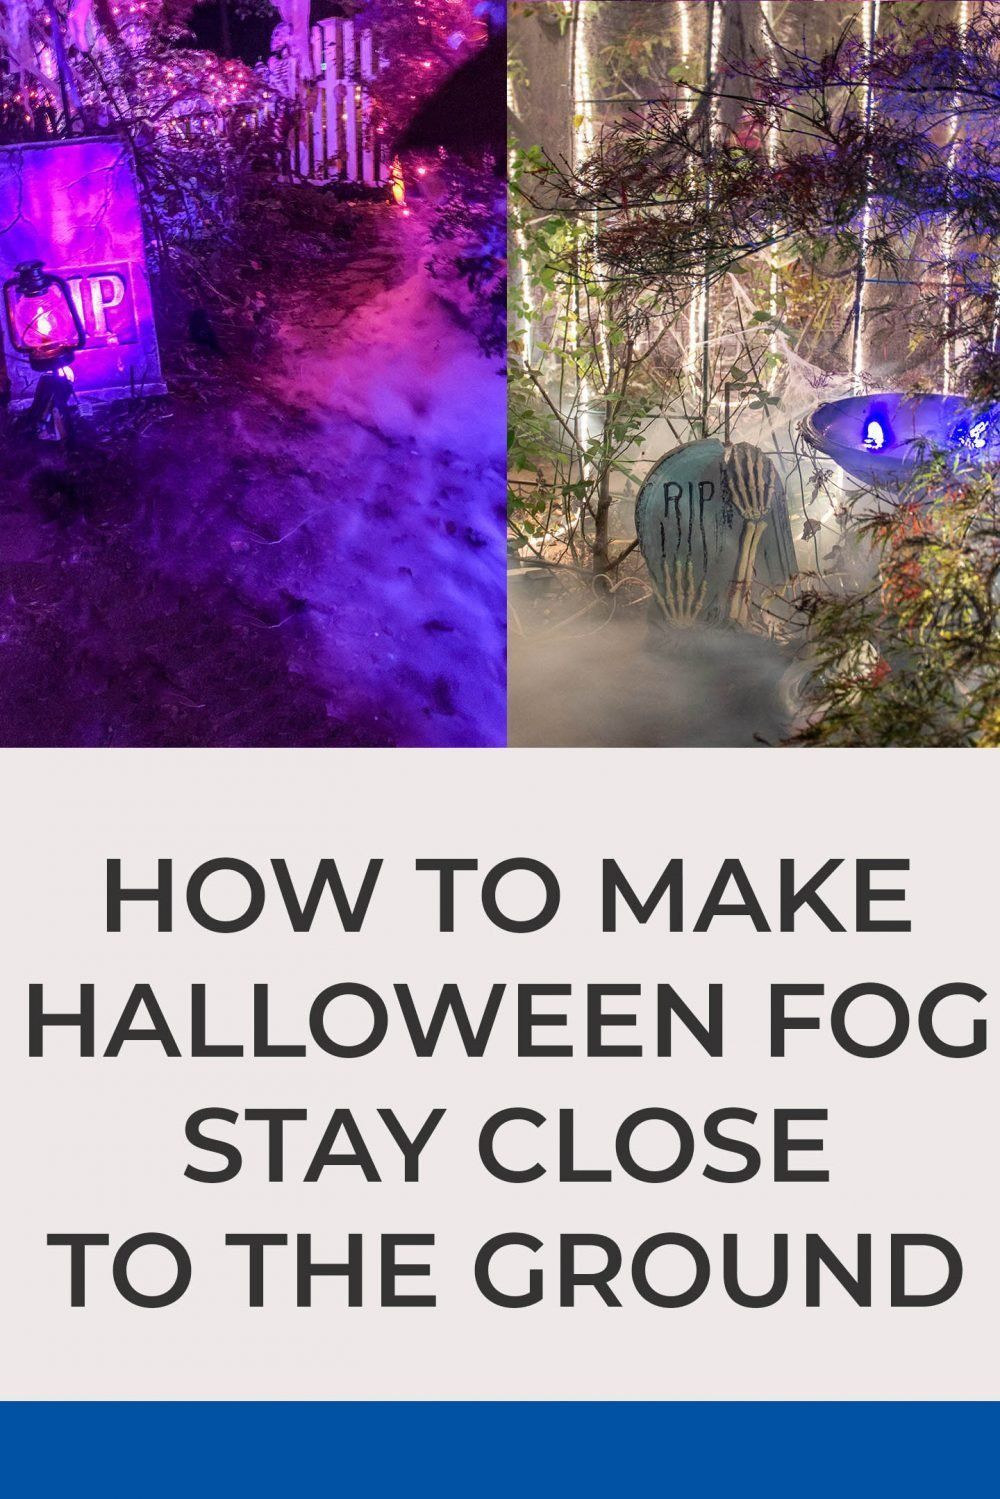 DIY Outdoor Fog Machine
 I love using a fog machine to make my outdoor Halloween